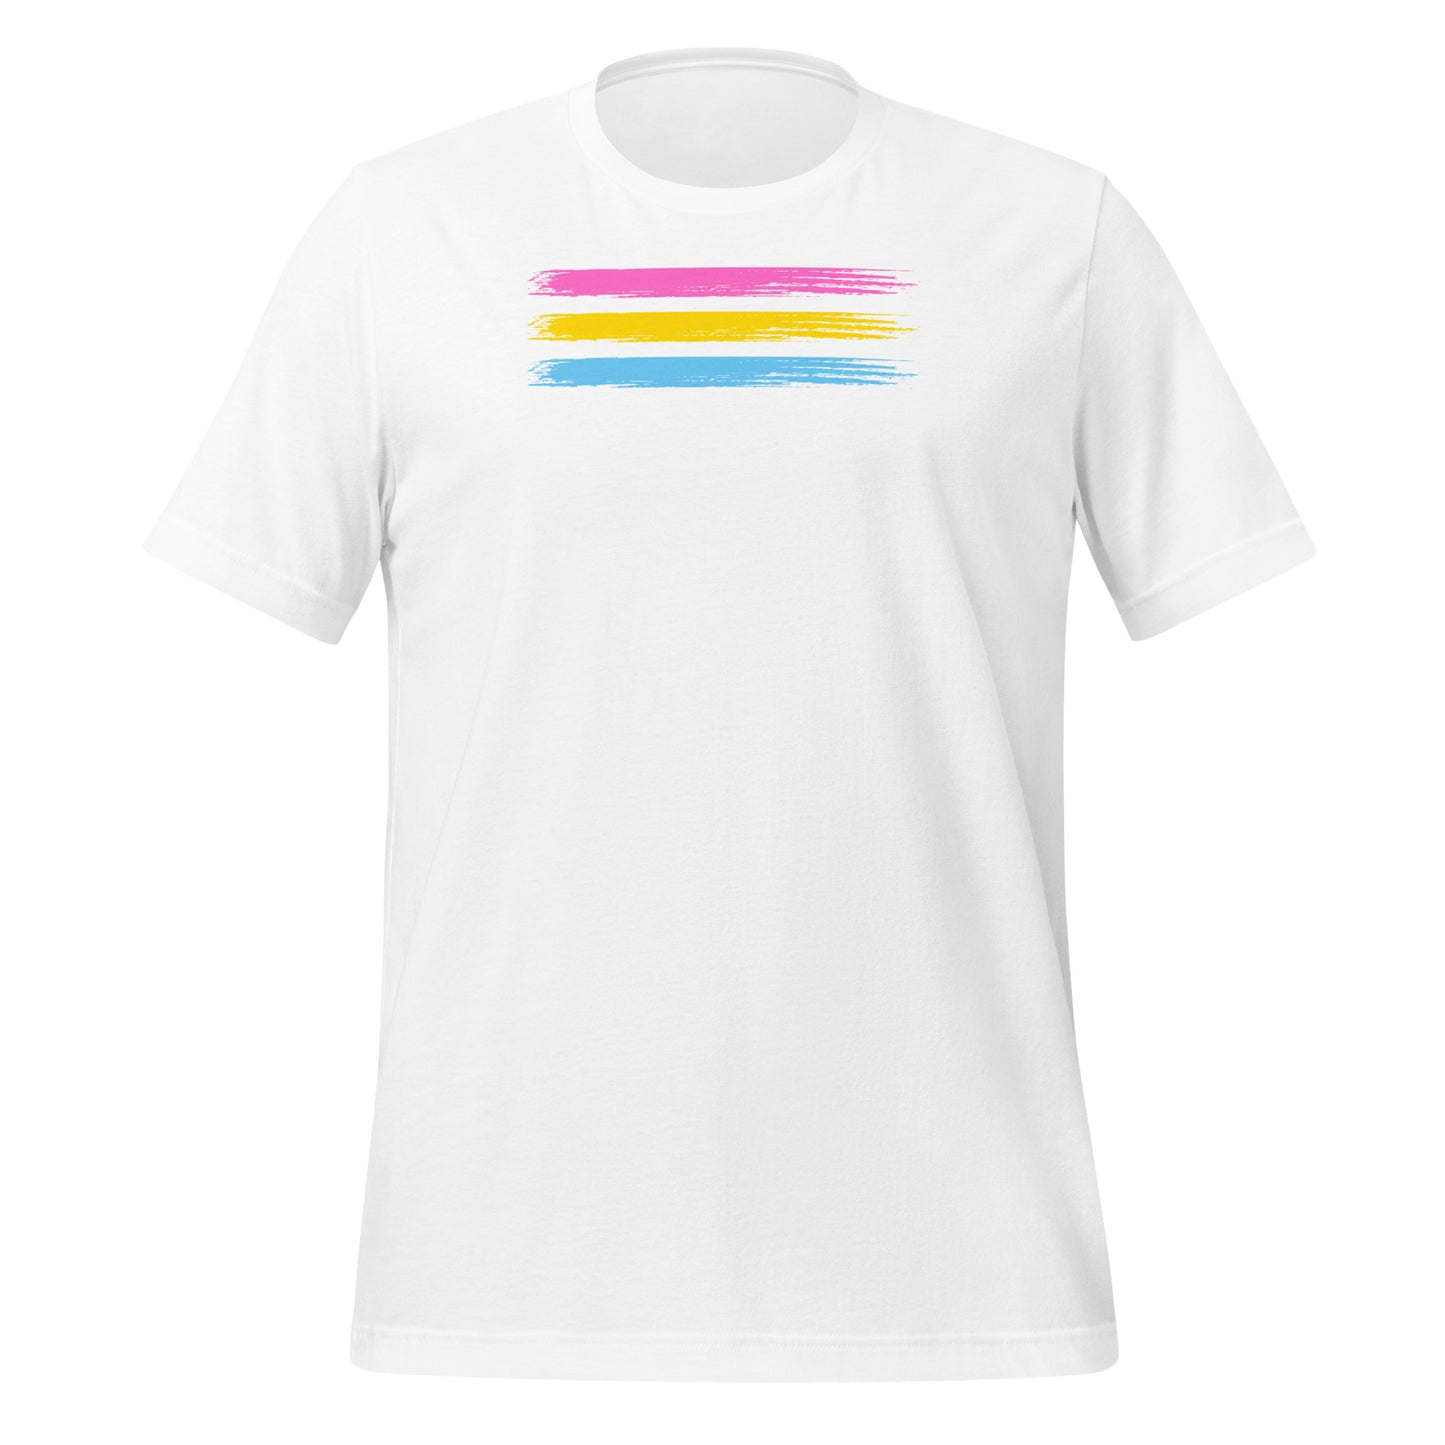 Pansexual Pride Flag unisex t-shirt